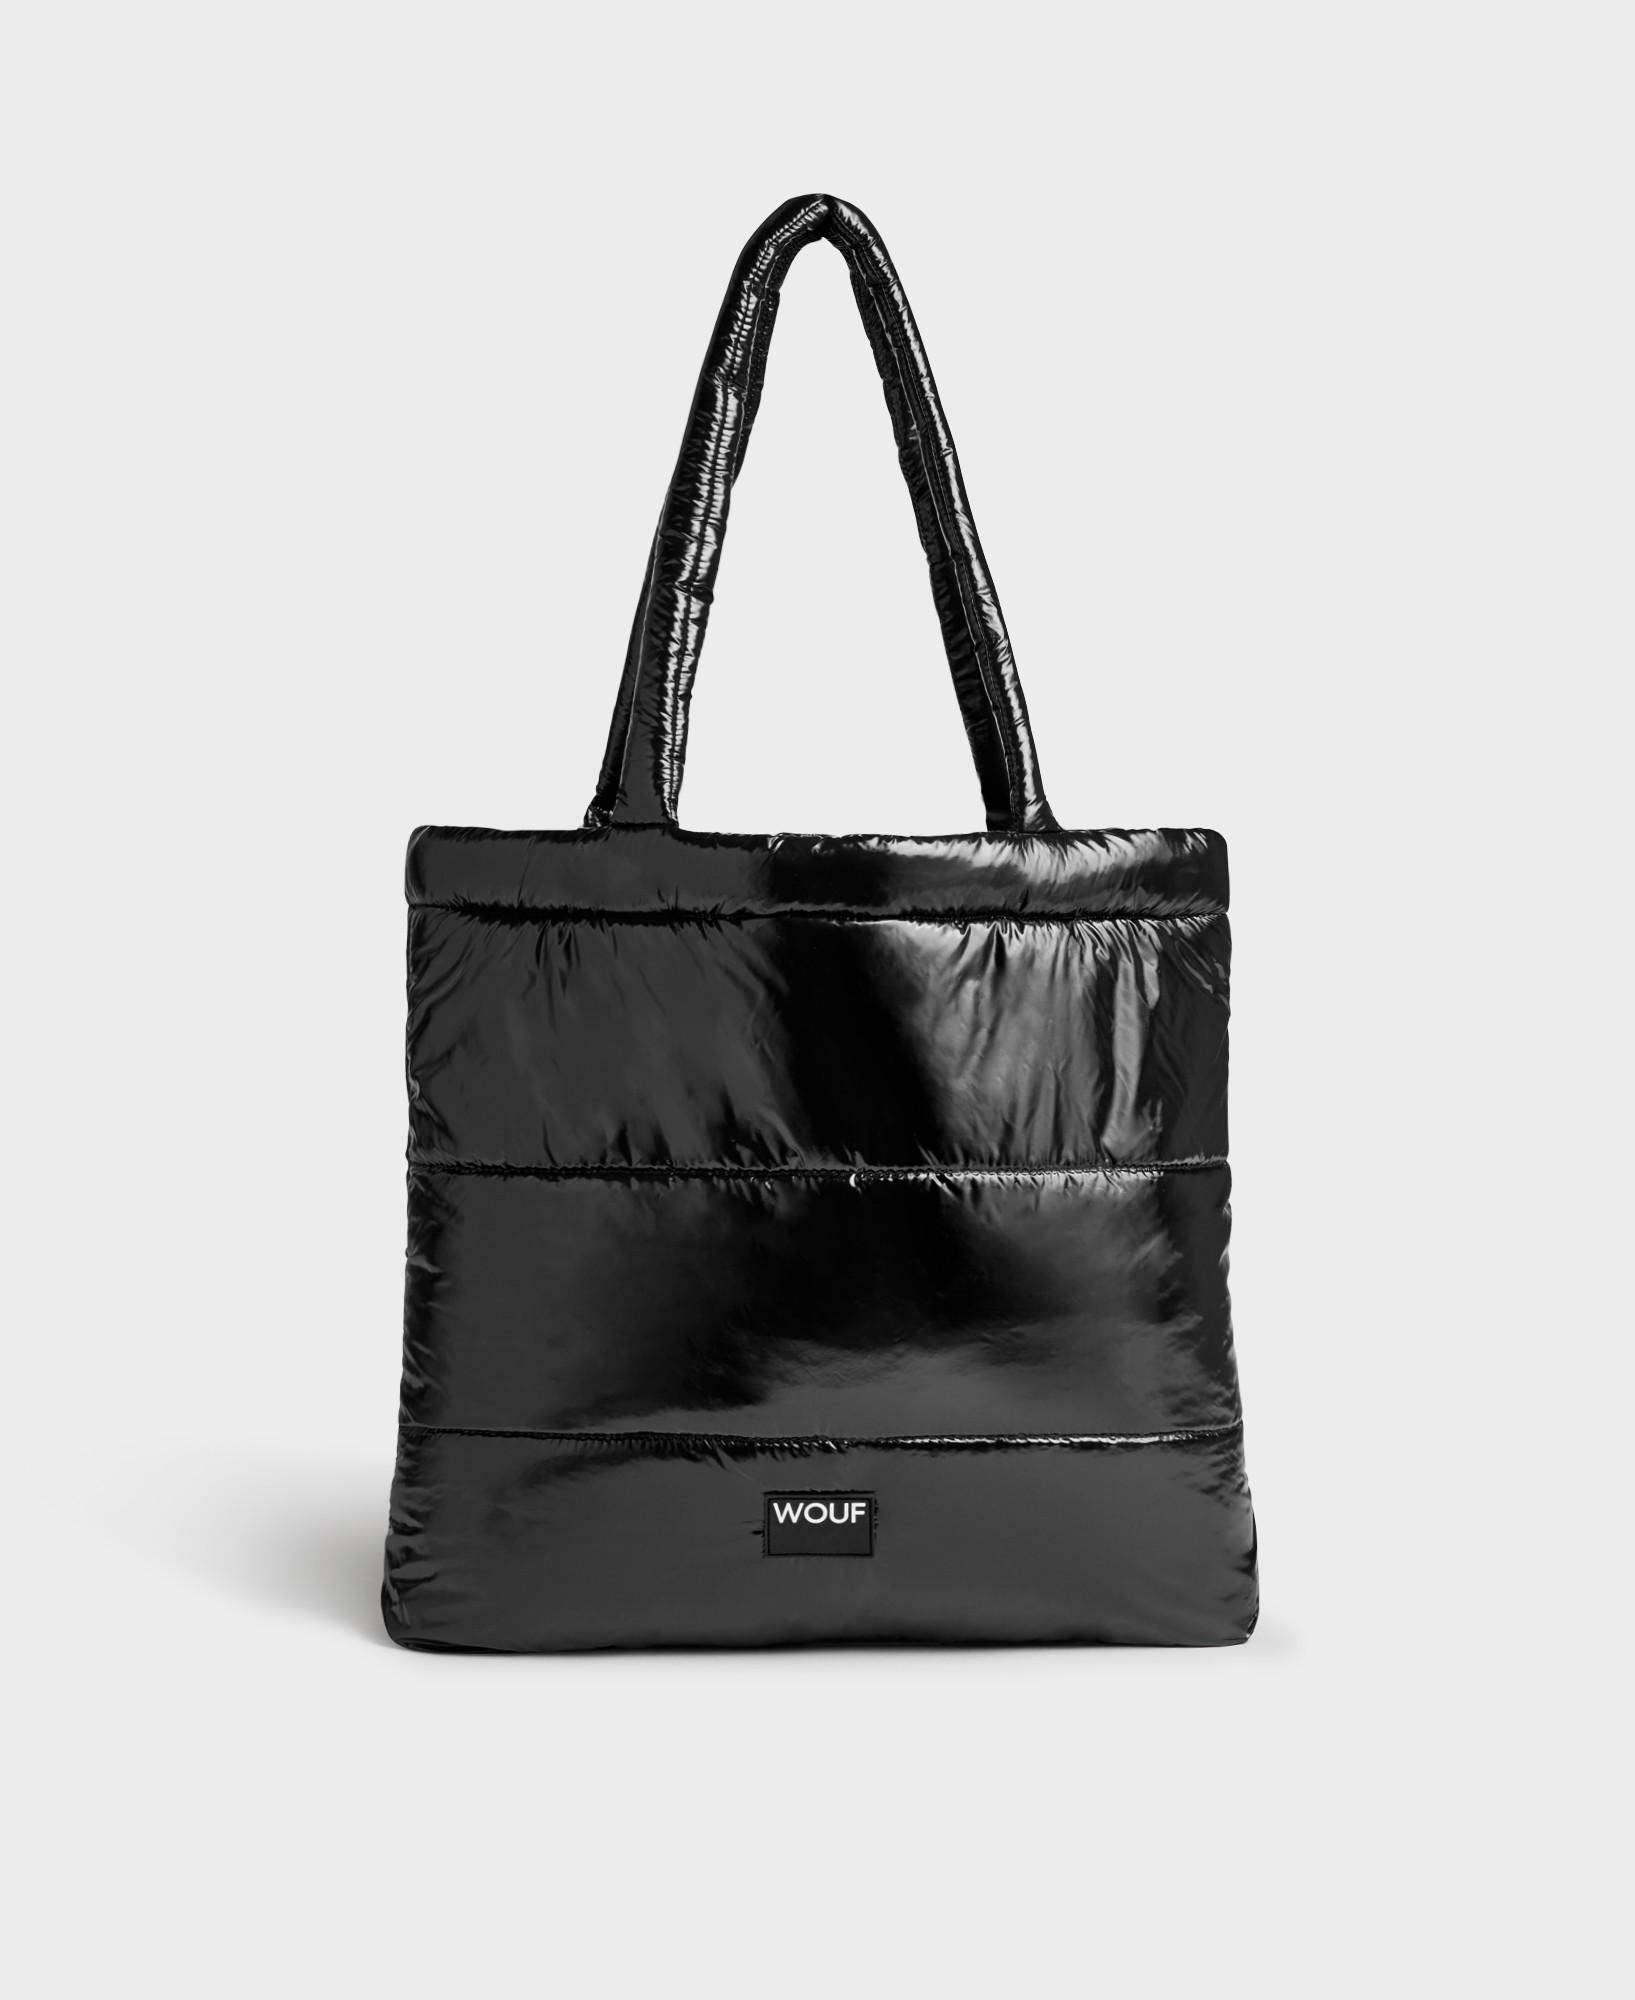 Wouf Glossy Black Tote Bag